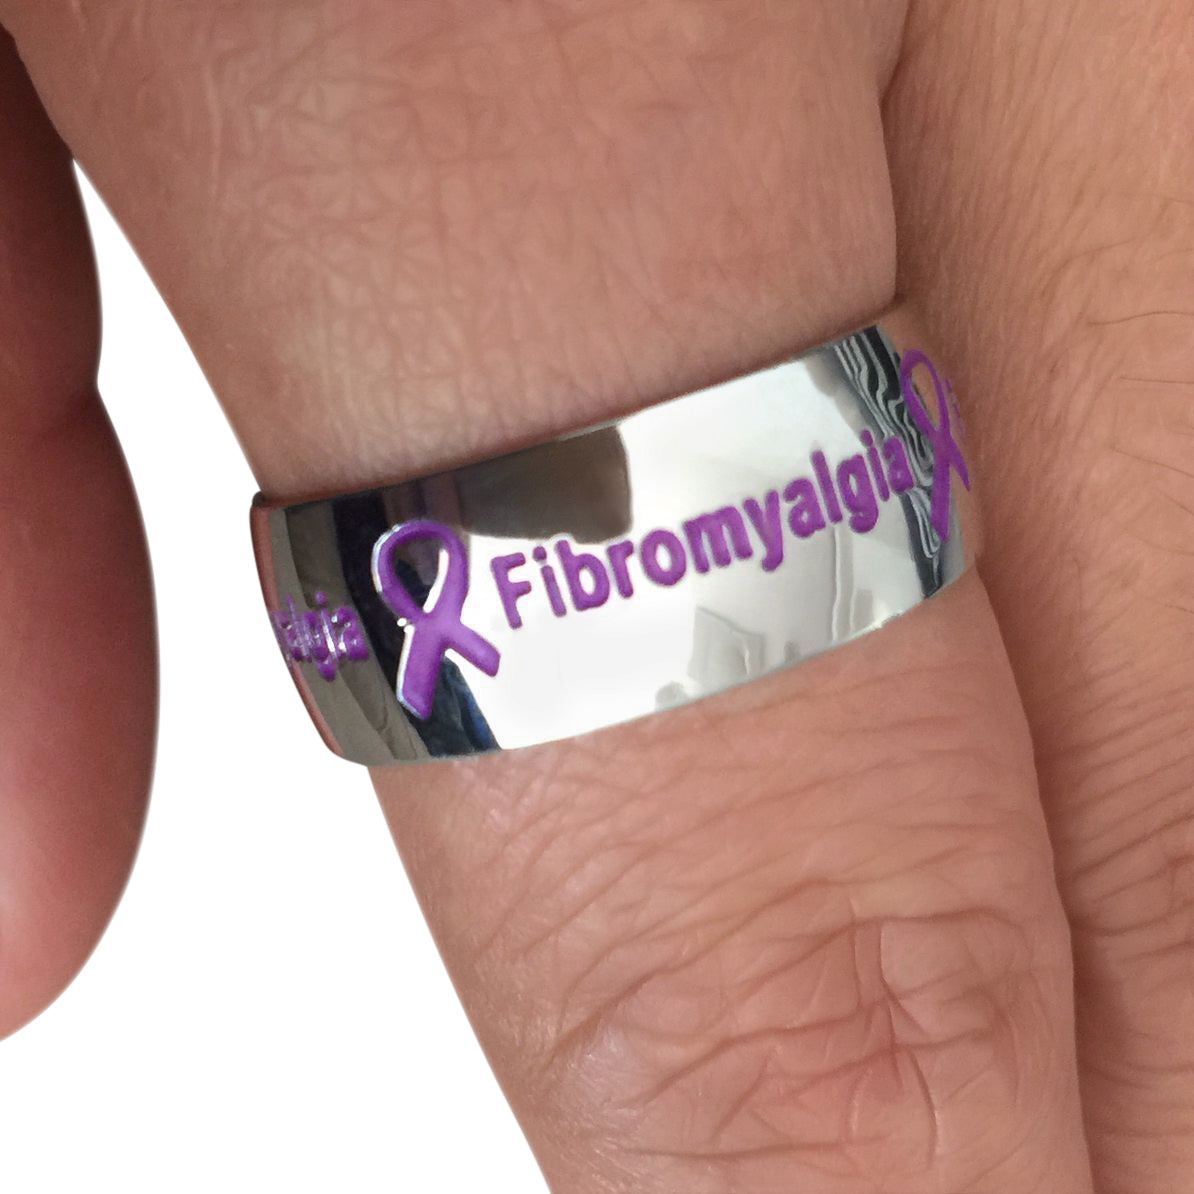 FREE Fibromyalgia Awareness Ring - Just Pay Shipping